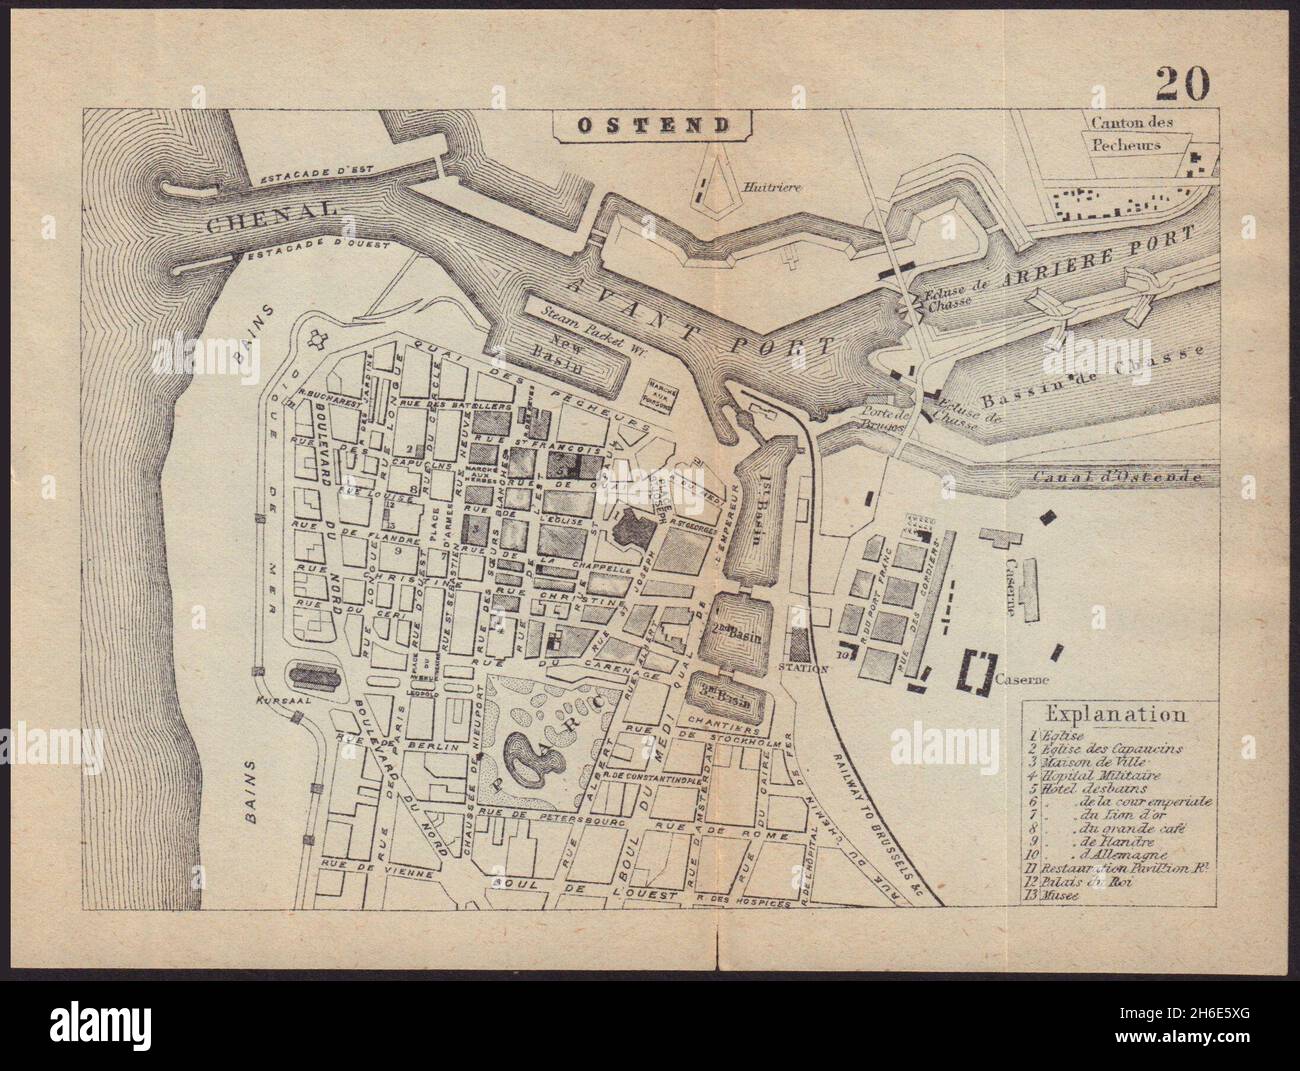 OSTEND OOSTENDE OSTENDE antique town plan city map. Belgium. BRADSHAW 1892 Stock Photo